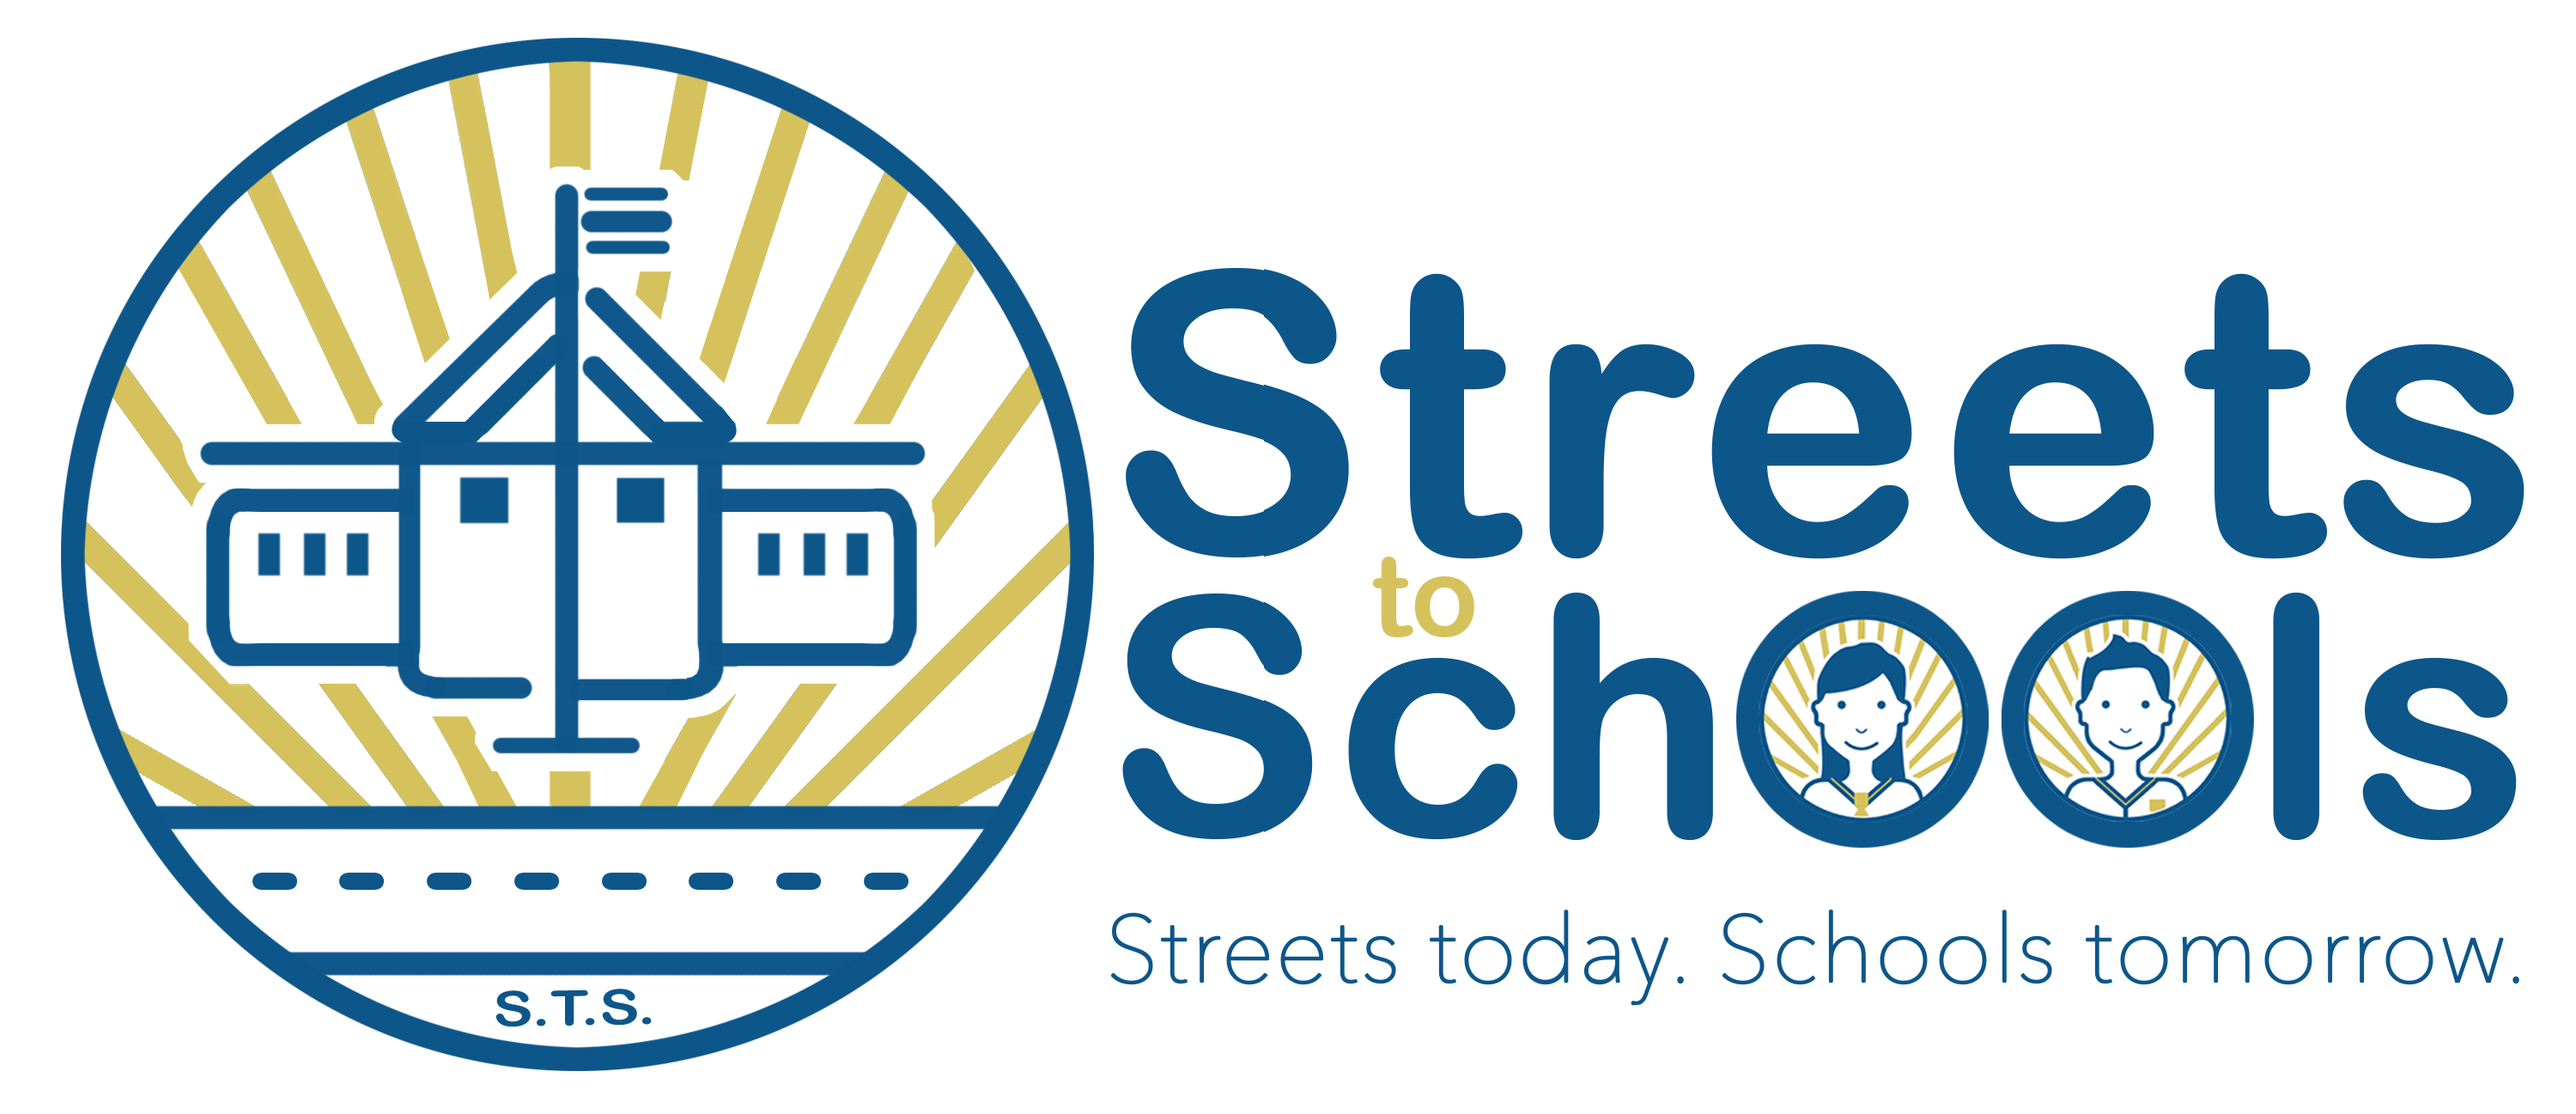 Streets to Schools